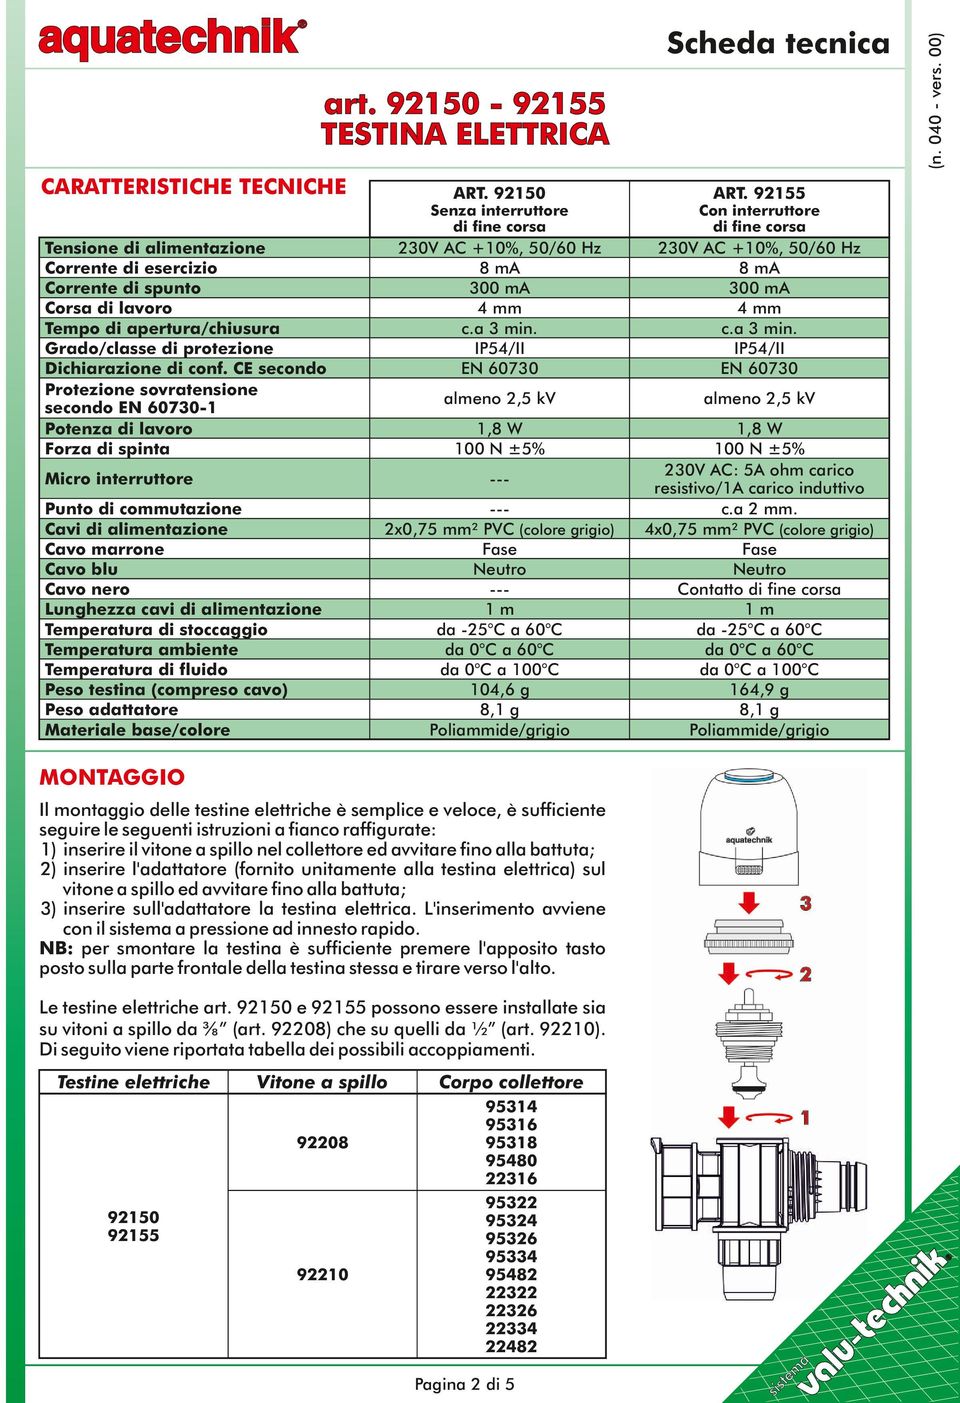 92155 Senz inrruttore di fine cors Con inrruttore di fine cors 230V AC +10%, 50/60 Hz 8 A 300 A 4 c. 3 in.